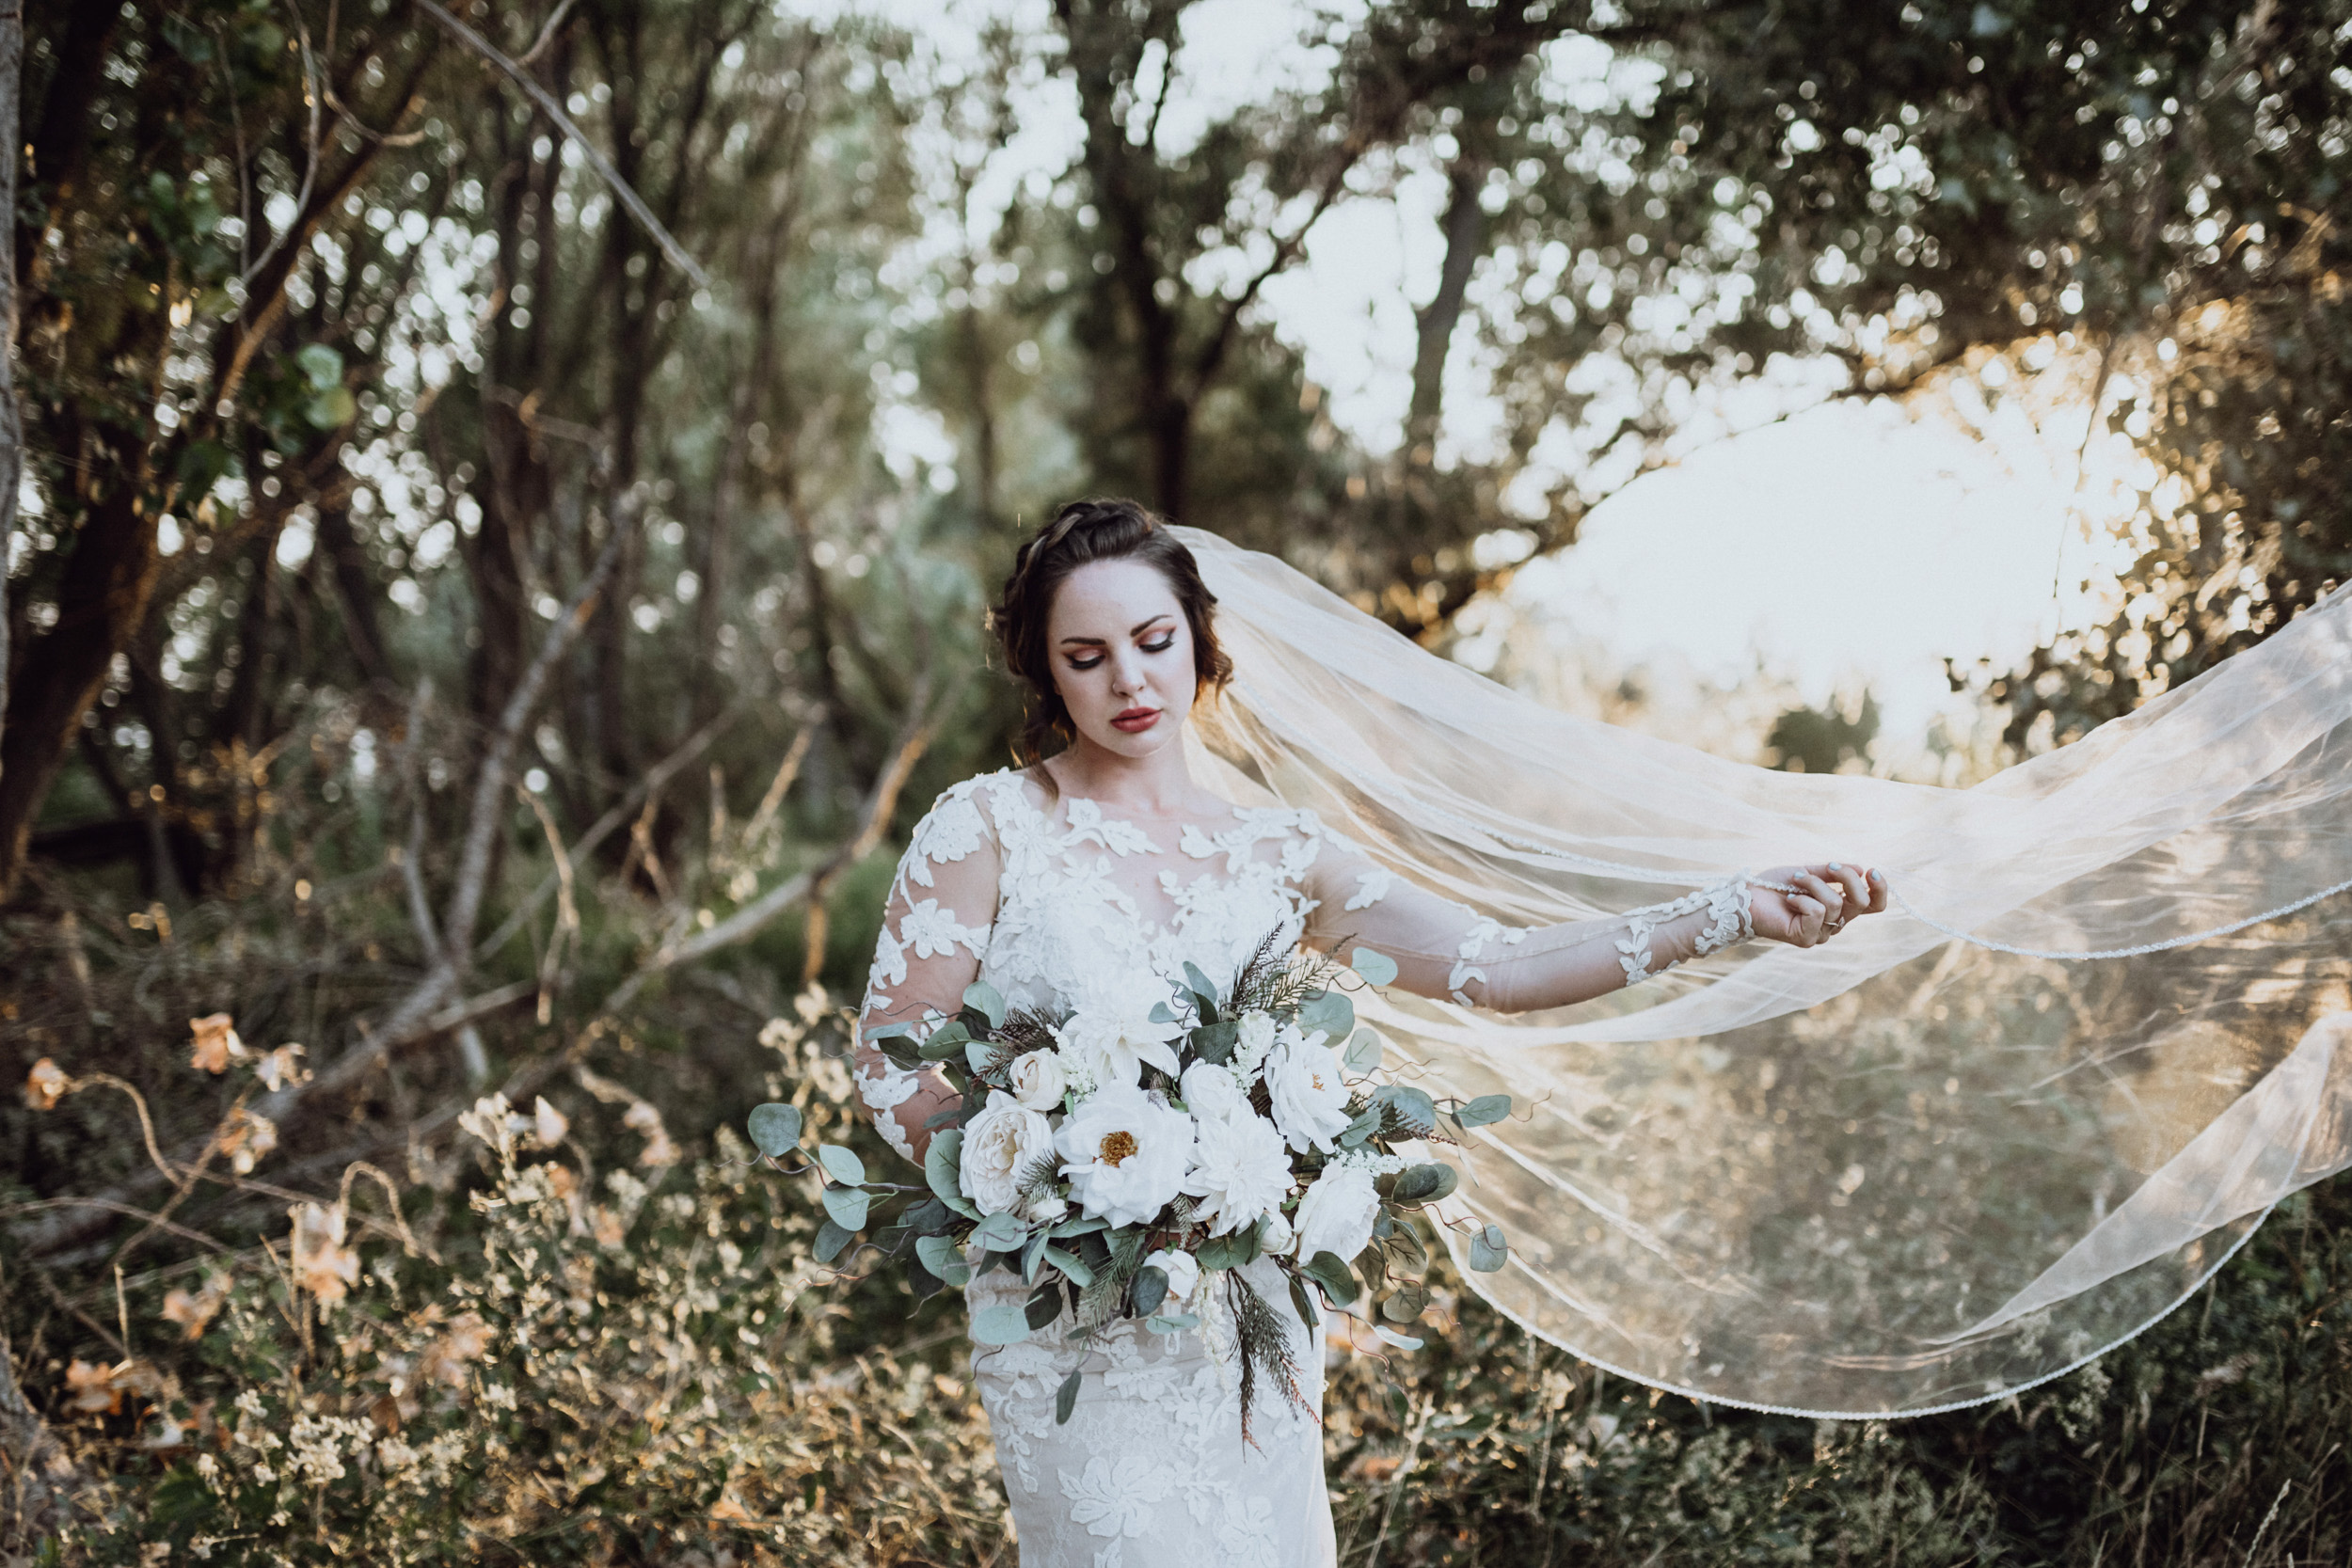 Bride holding bouquet in grassy field 